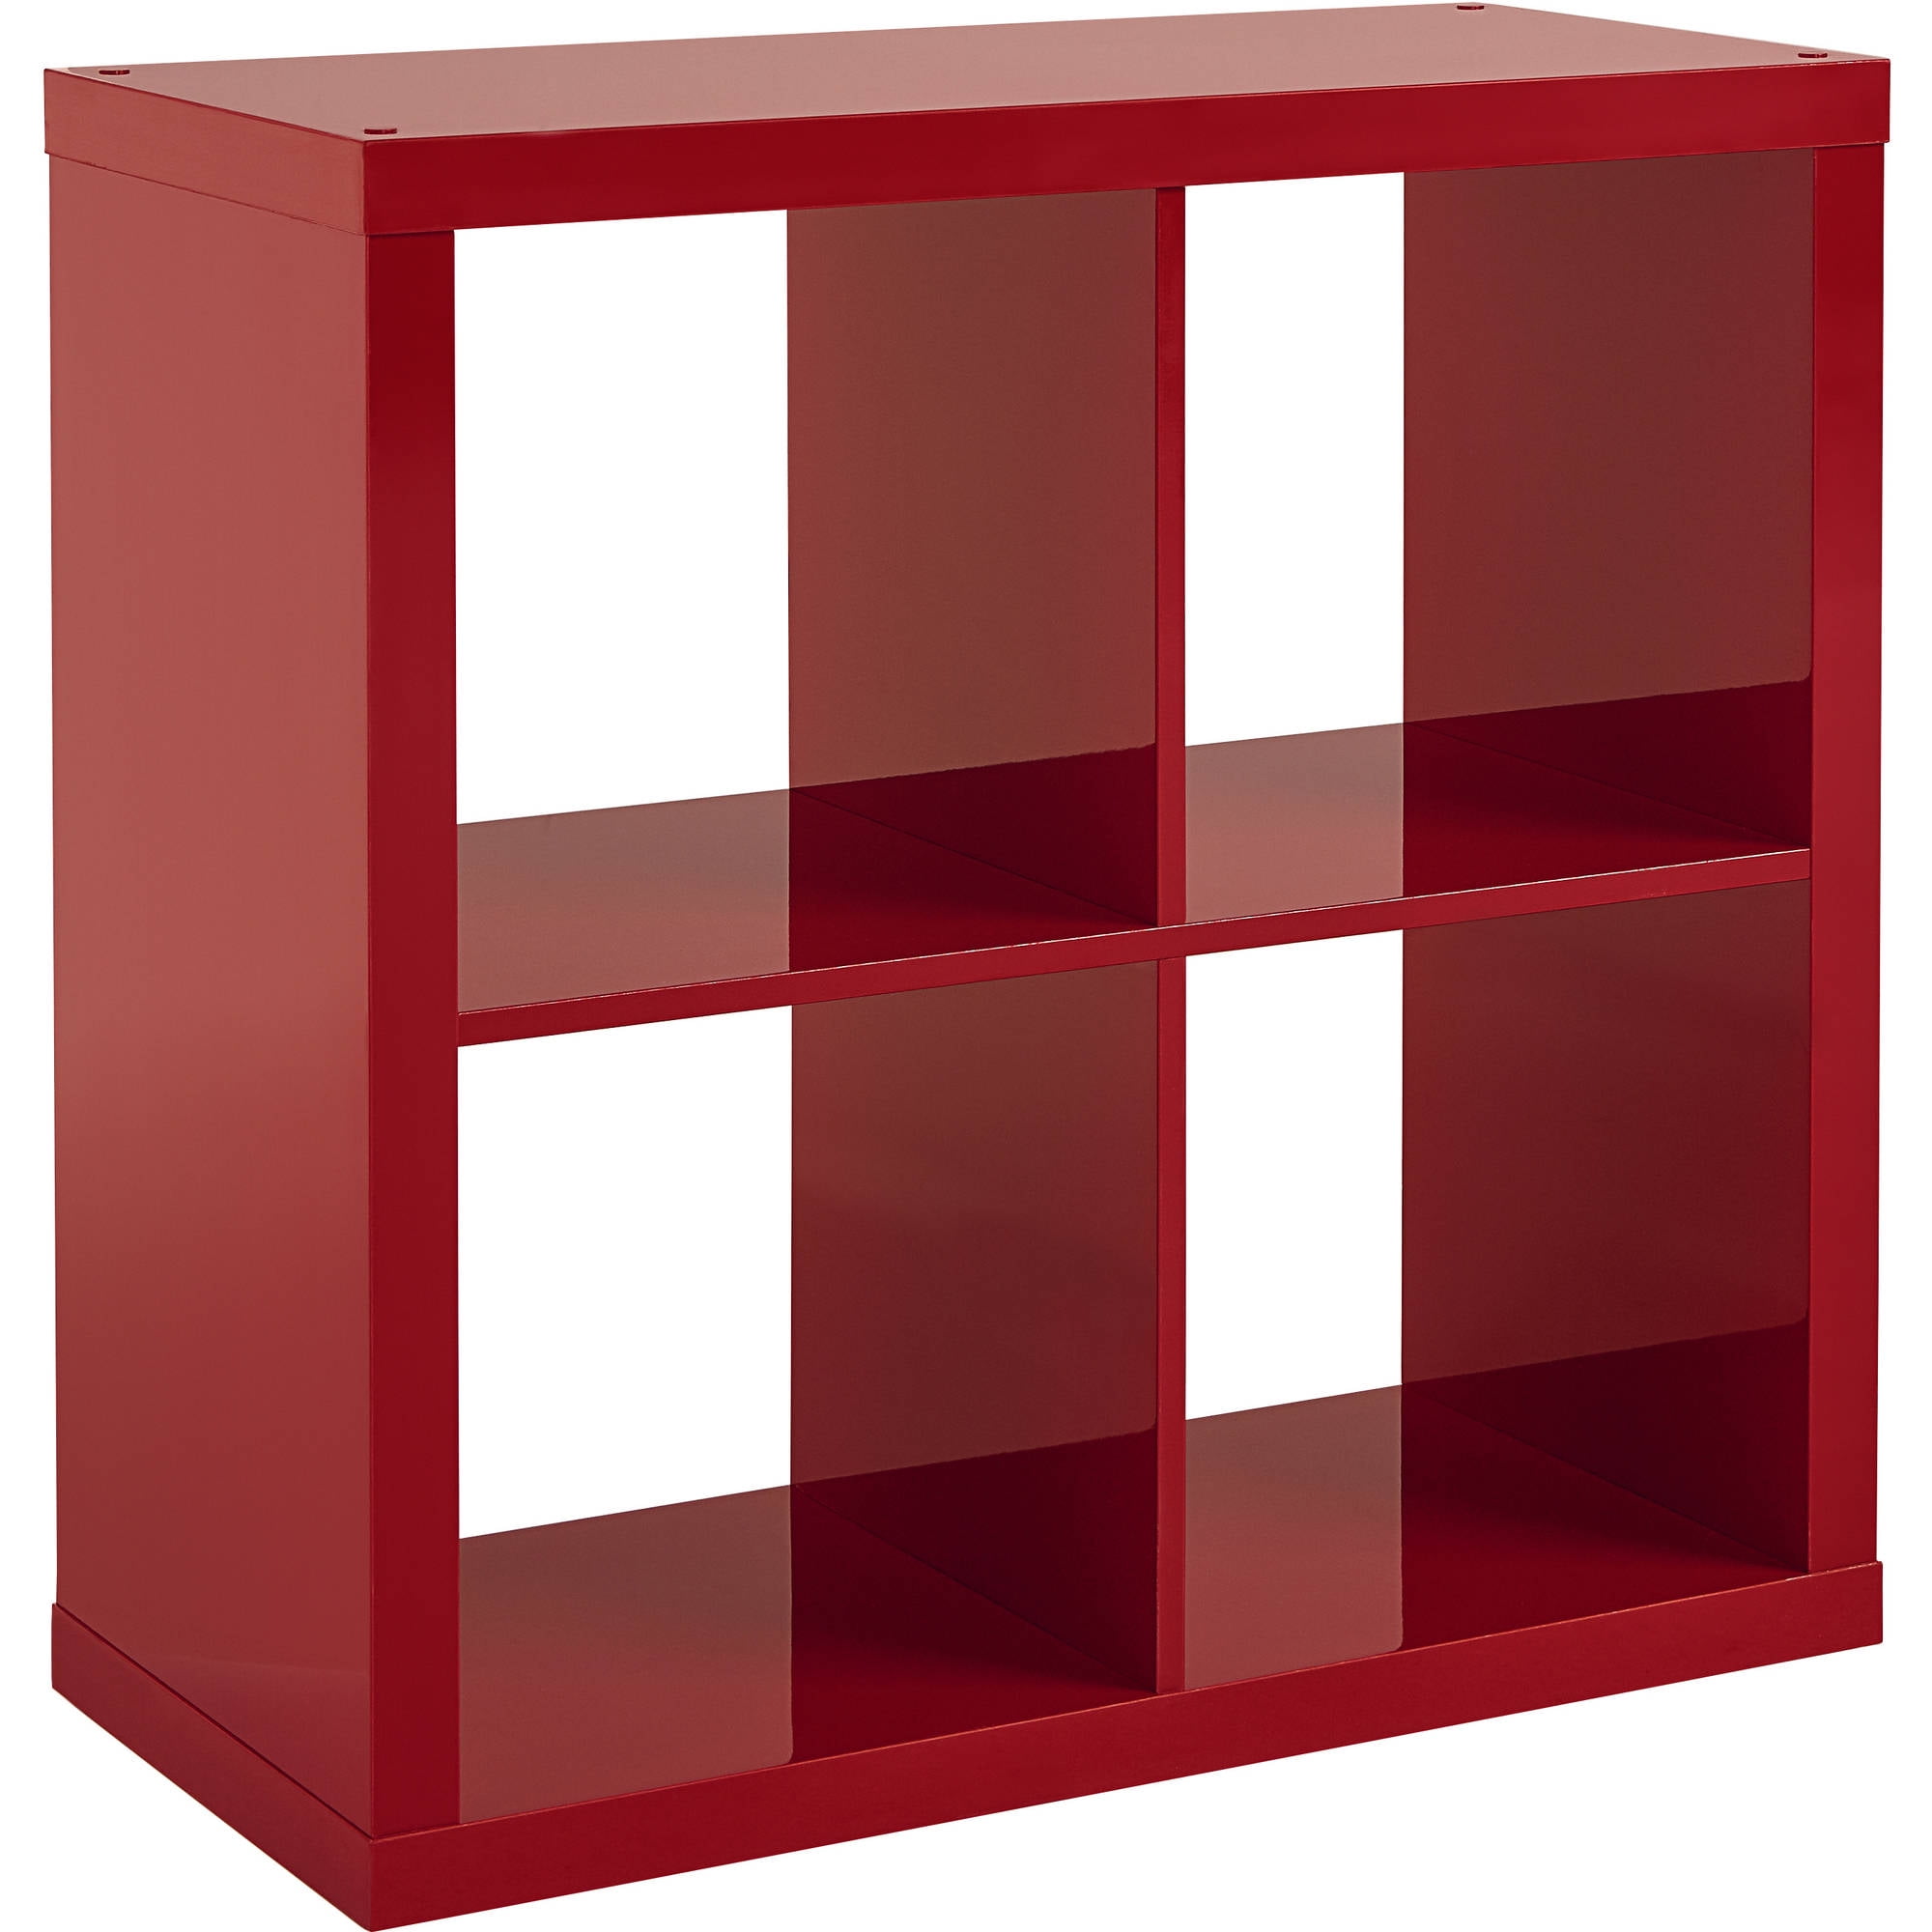 Birdrock Home Linen Cube Organizer Shelf with 4 Storage Bins Gray